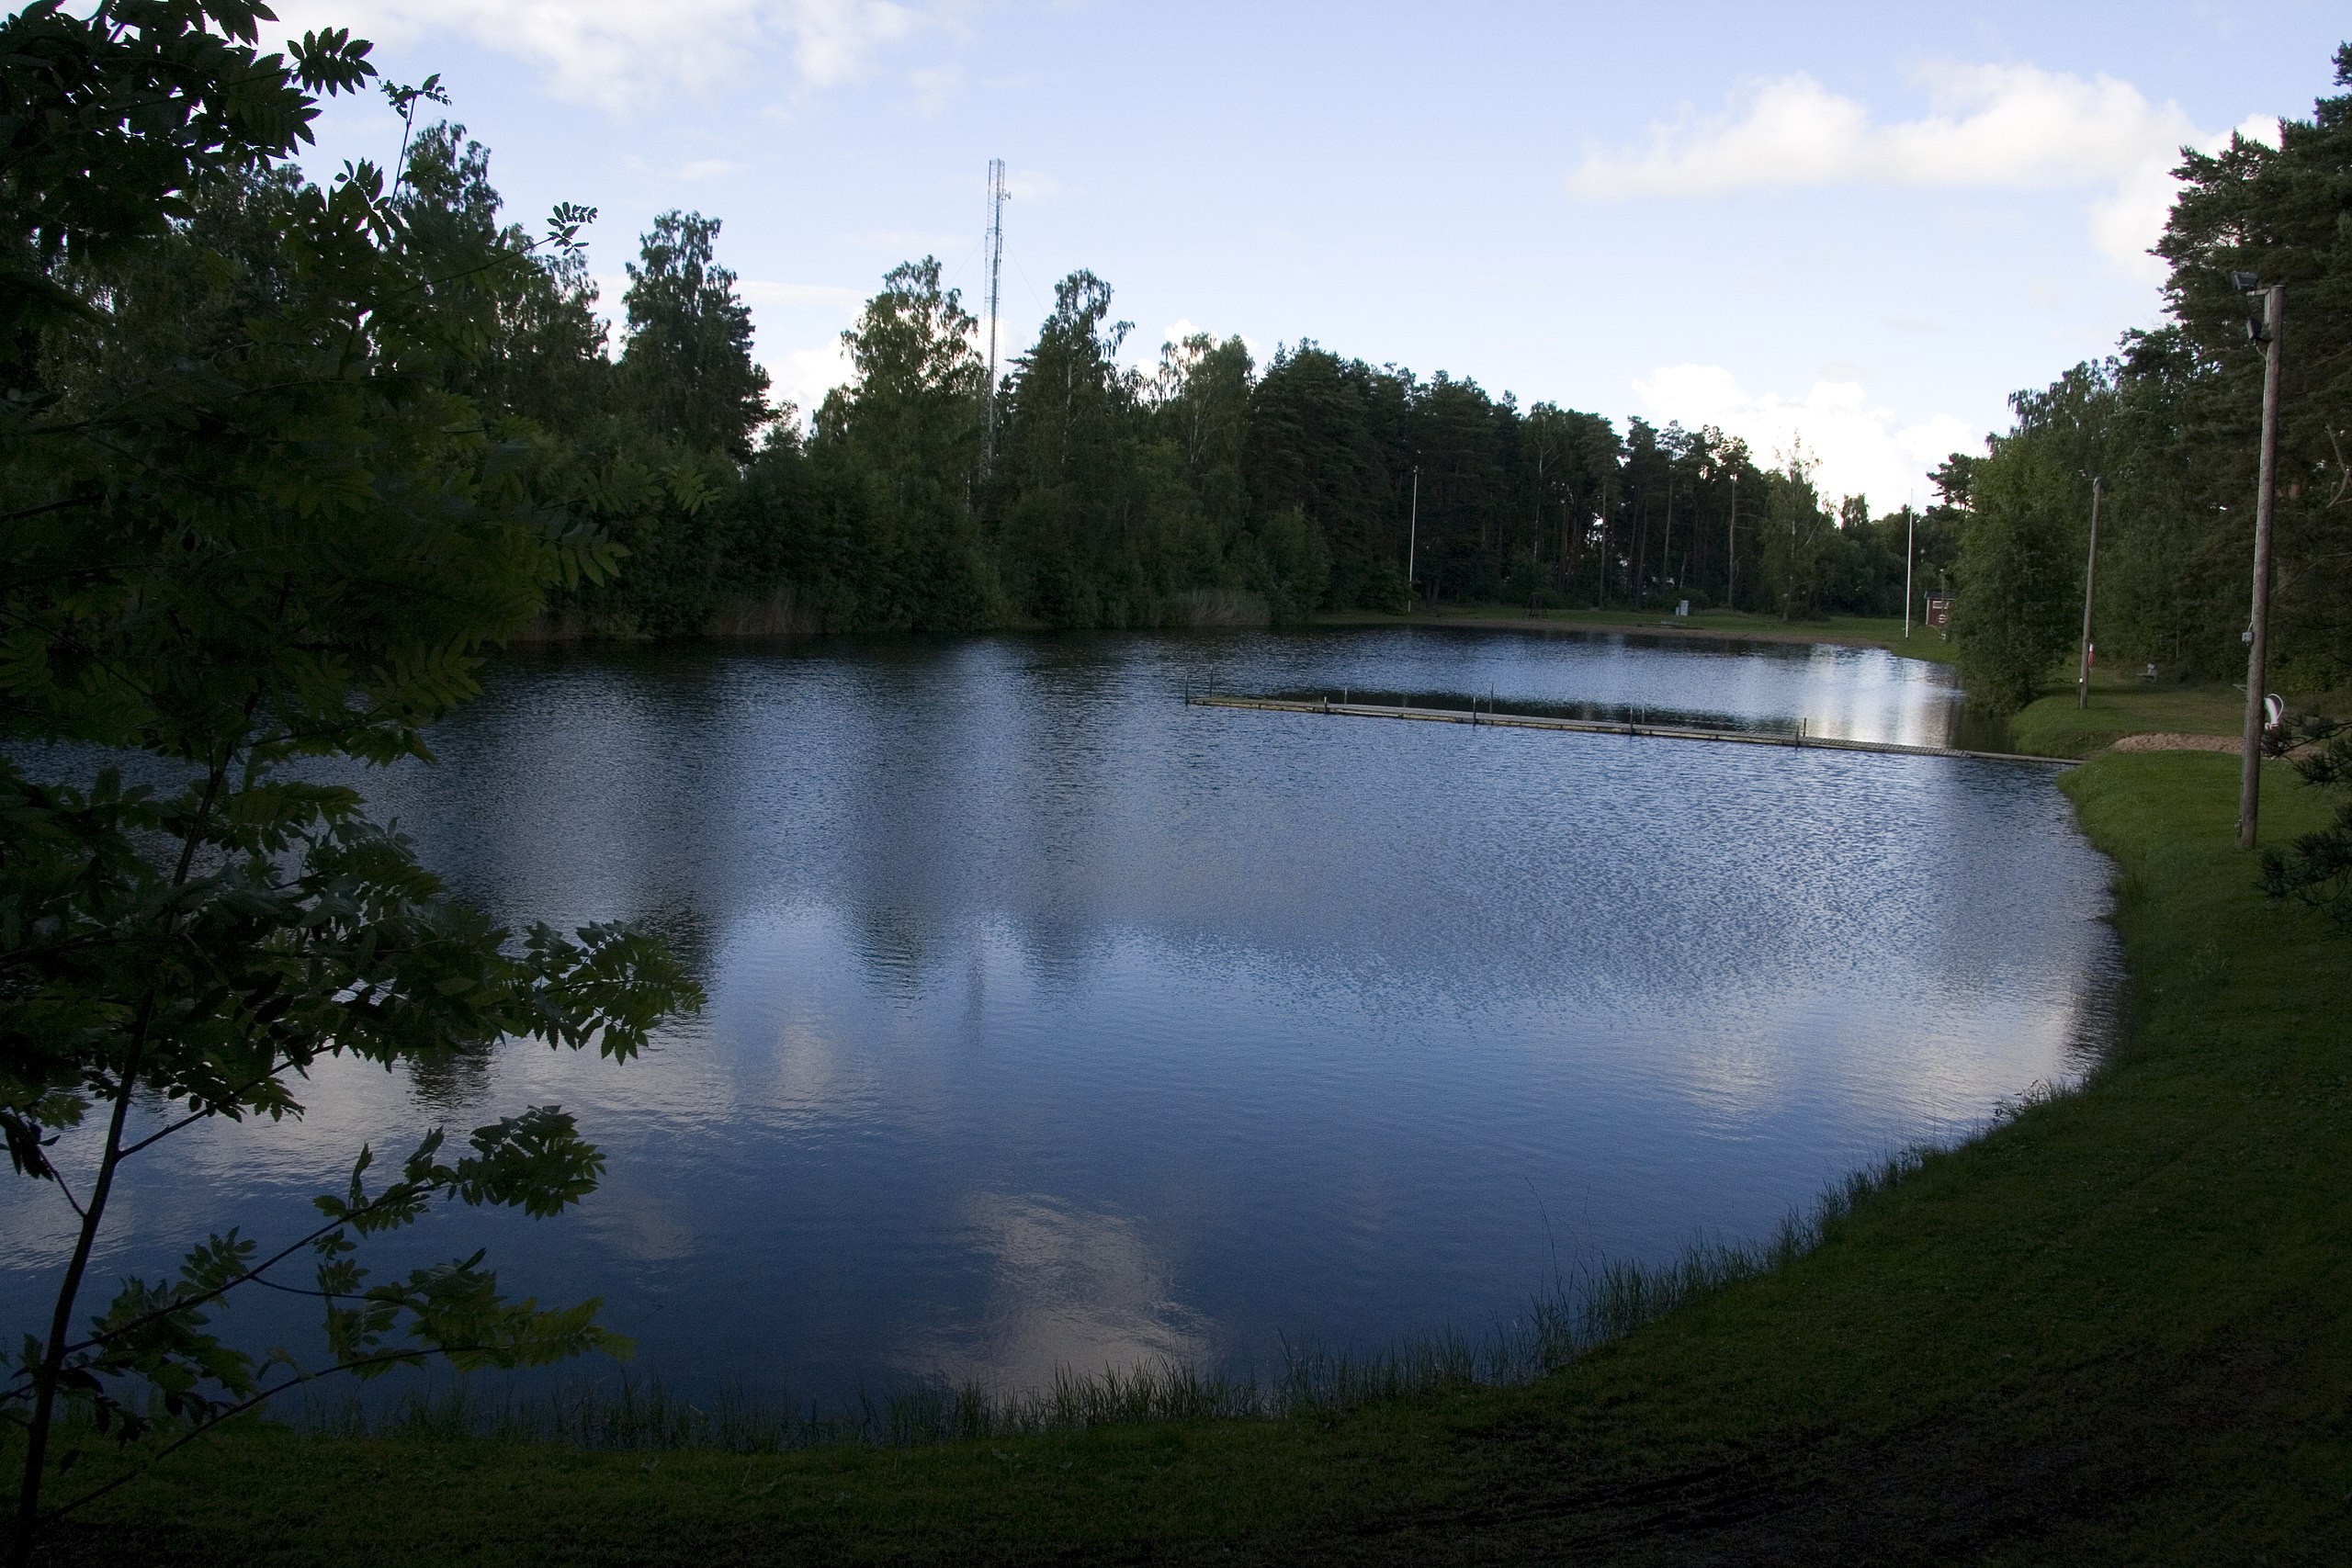 File:Järpås badsjö jpg - Wikimedia Commons